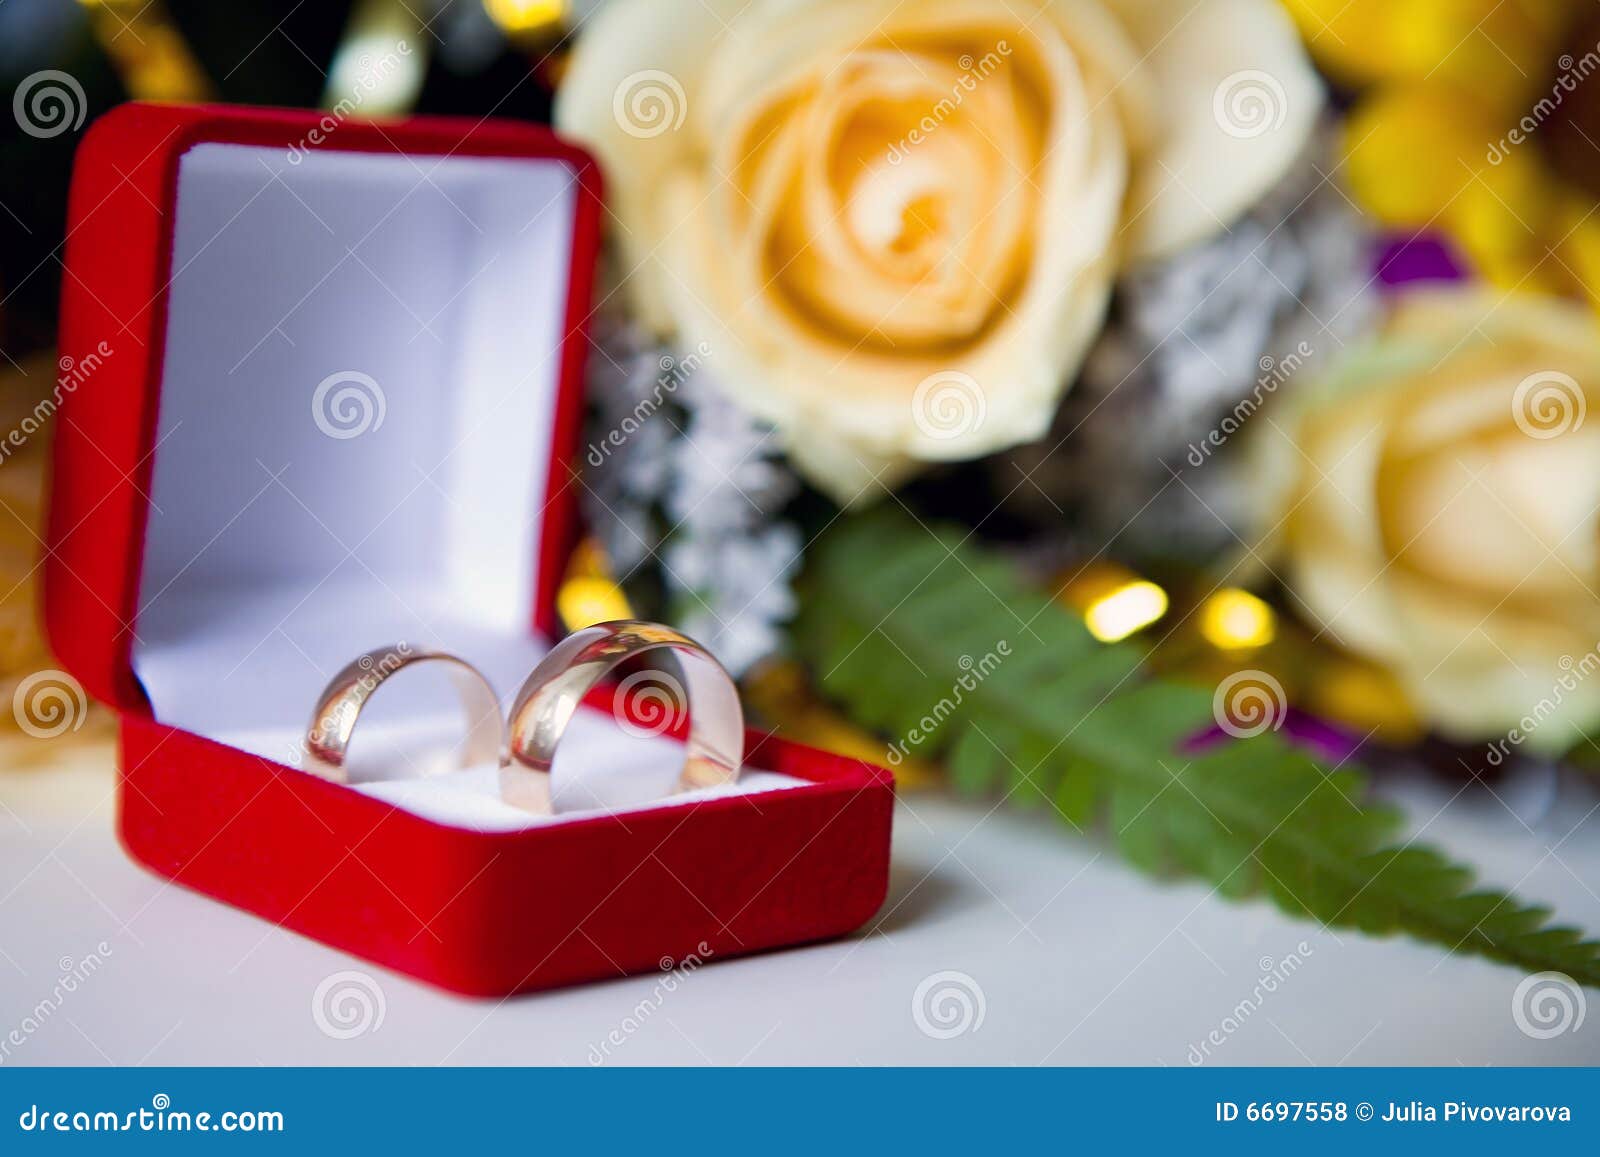 Wedding bands stock photo. Image of bands, flower, rose - 6697558